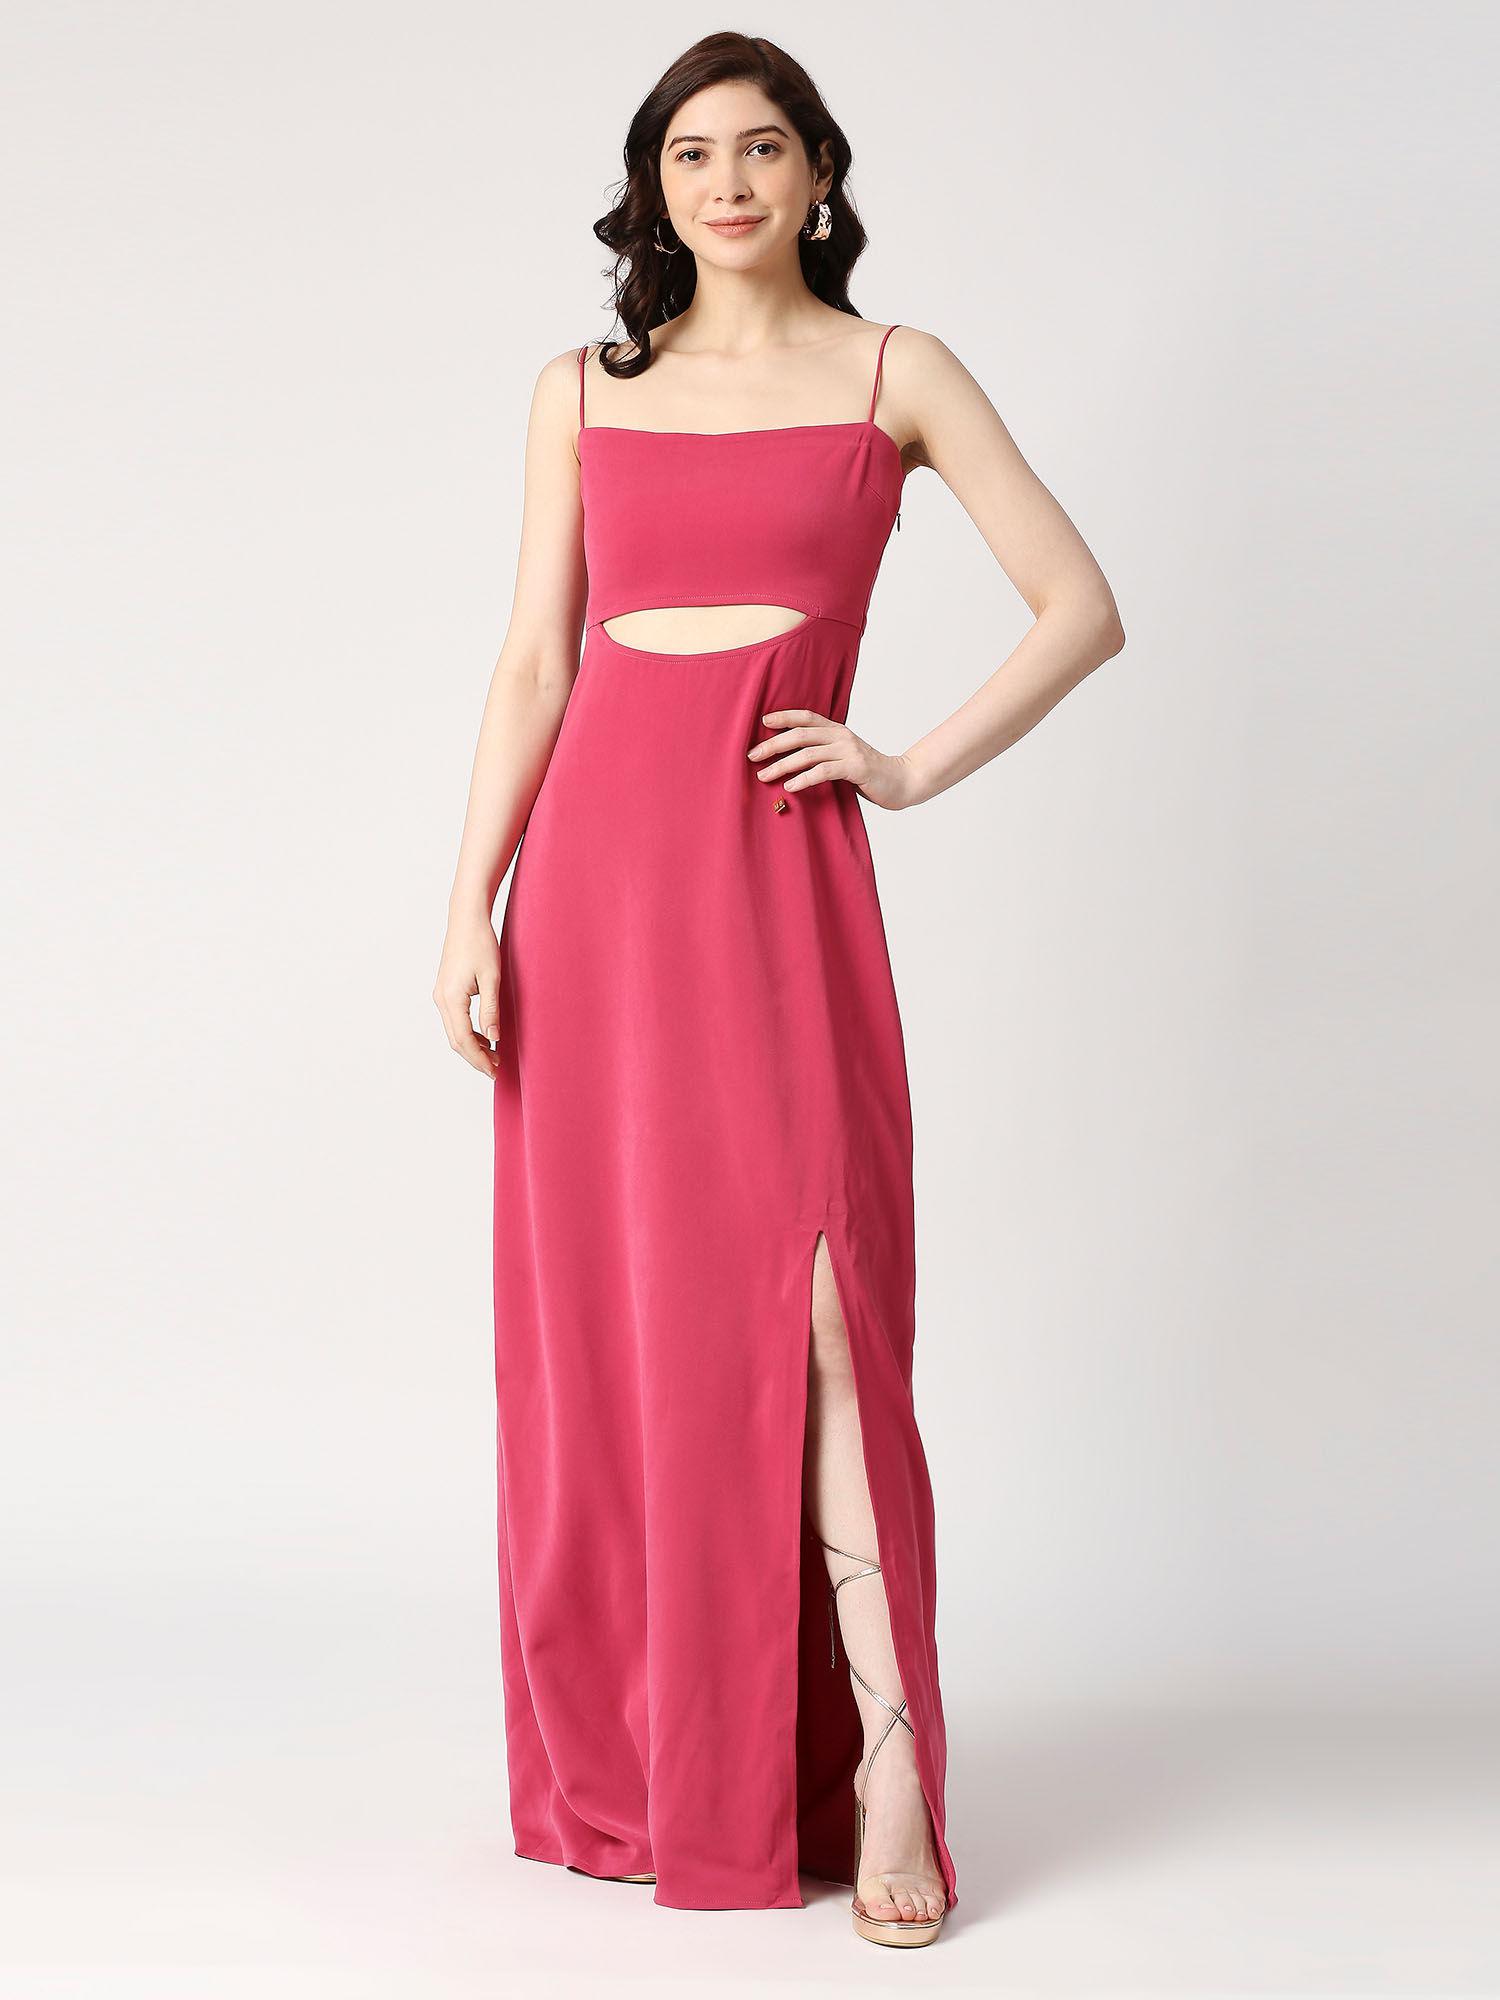 anckle length dress with slit